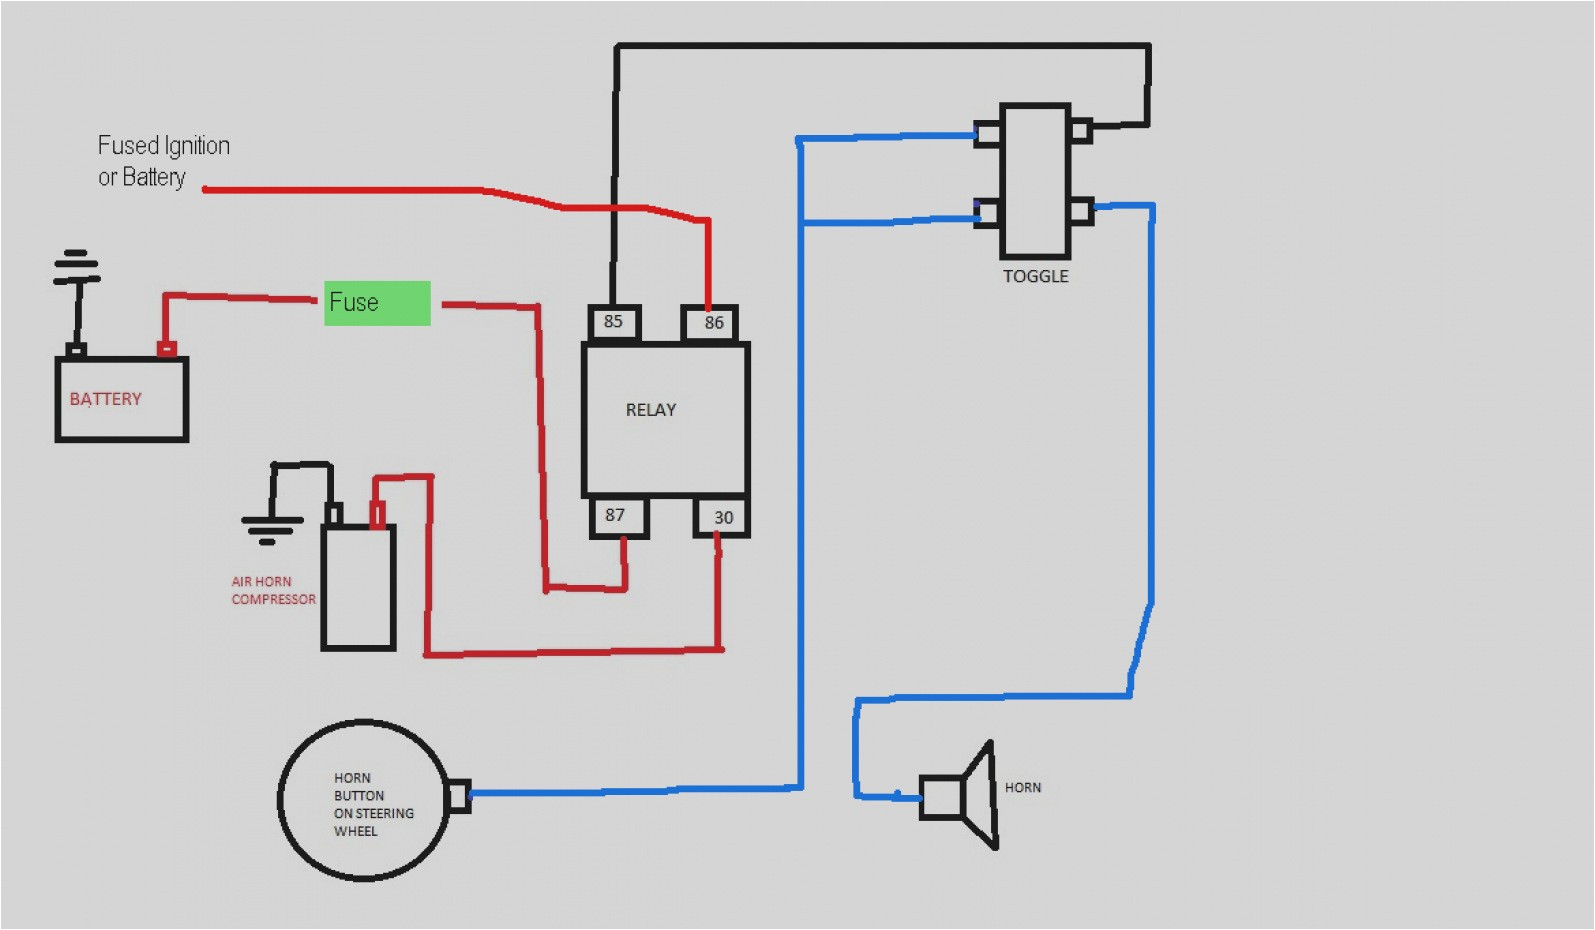 yankee wire diagram wiring diagramomega air horn wiring diagram wiring diagram blogyankee wire diagram 16